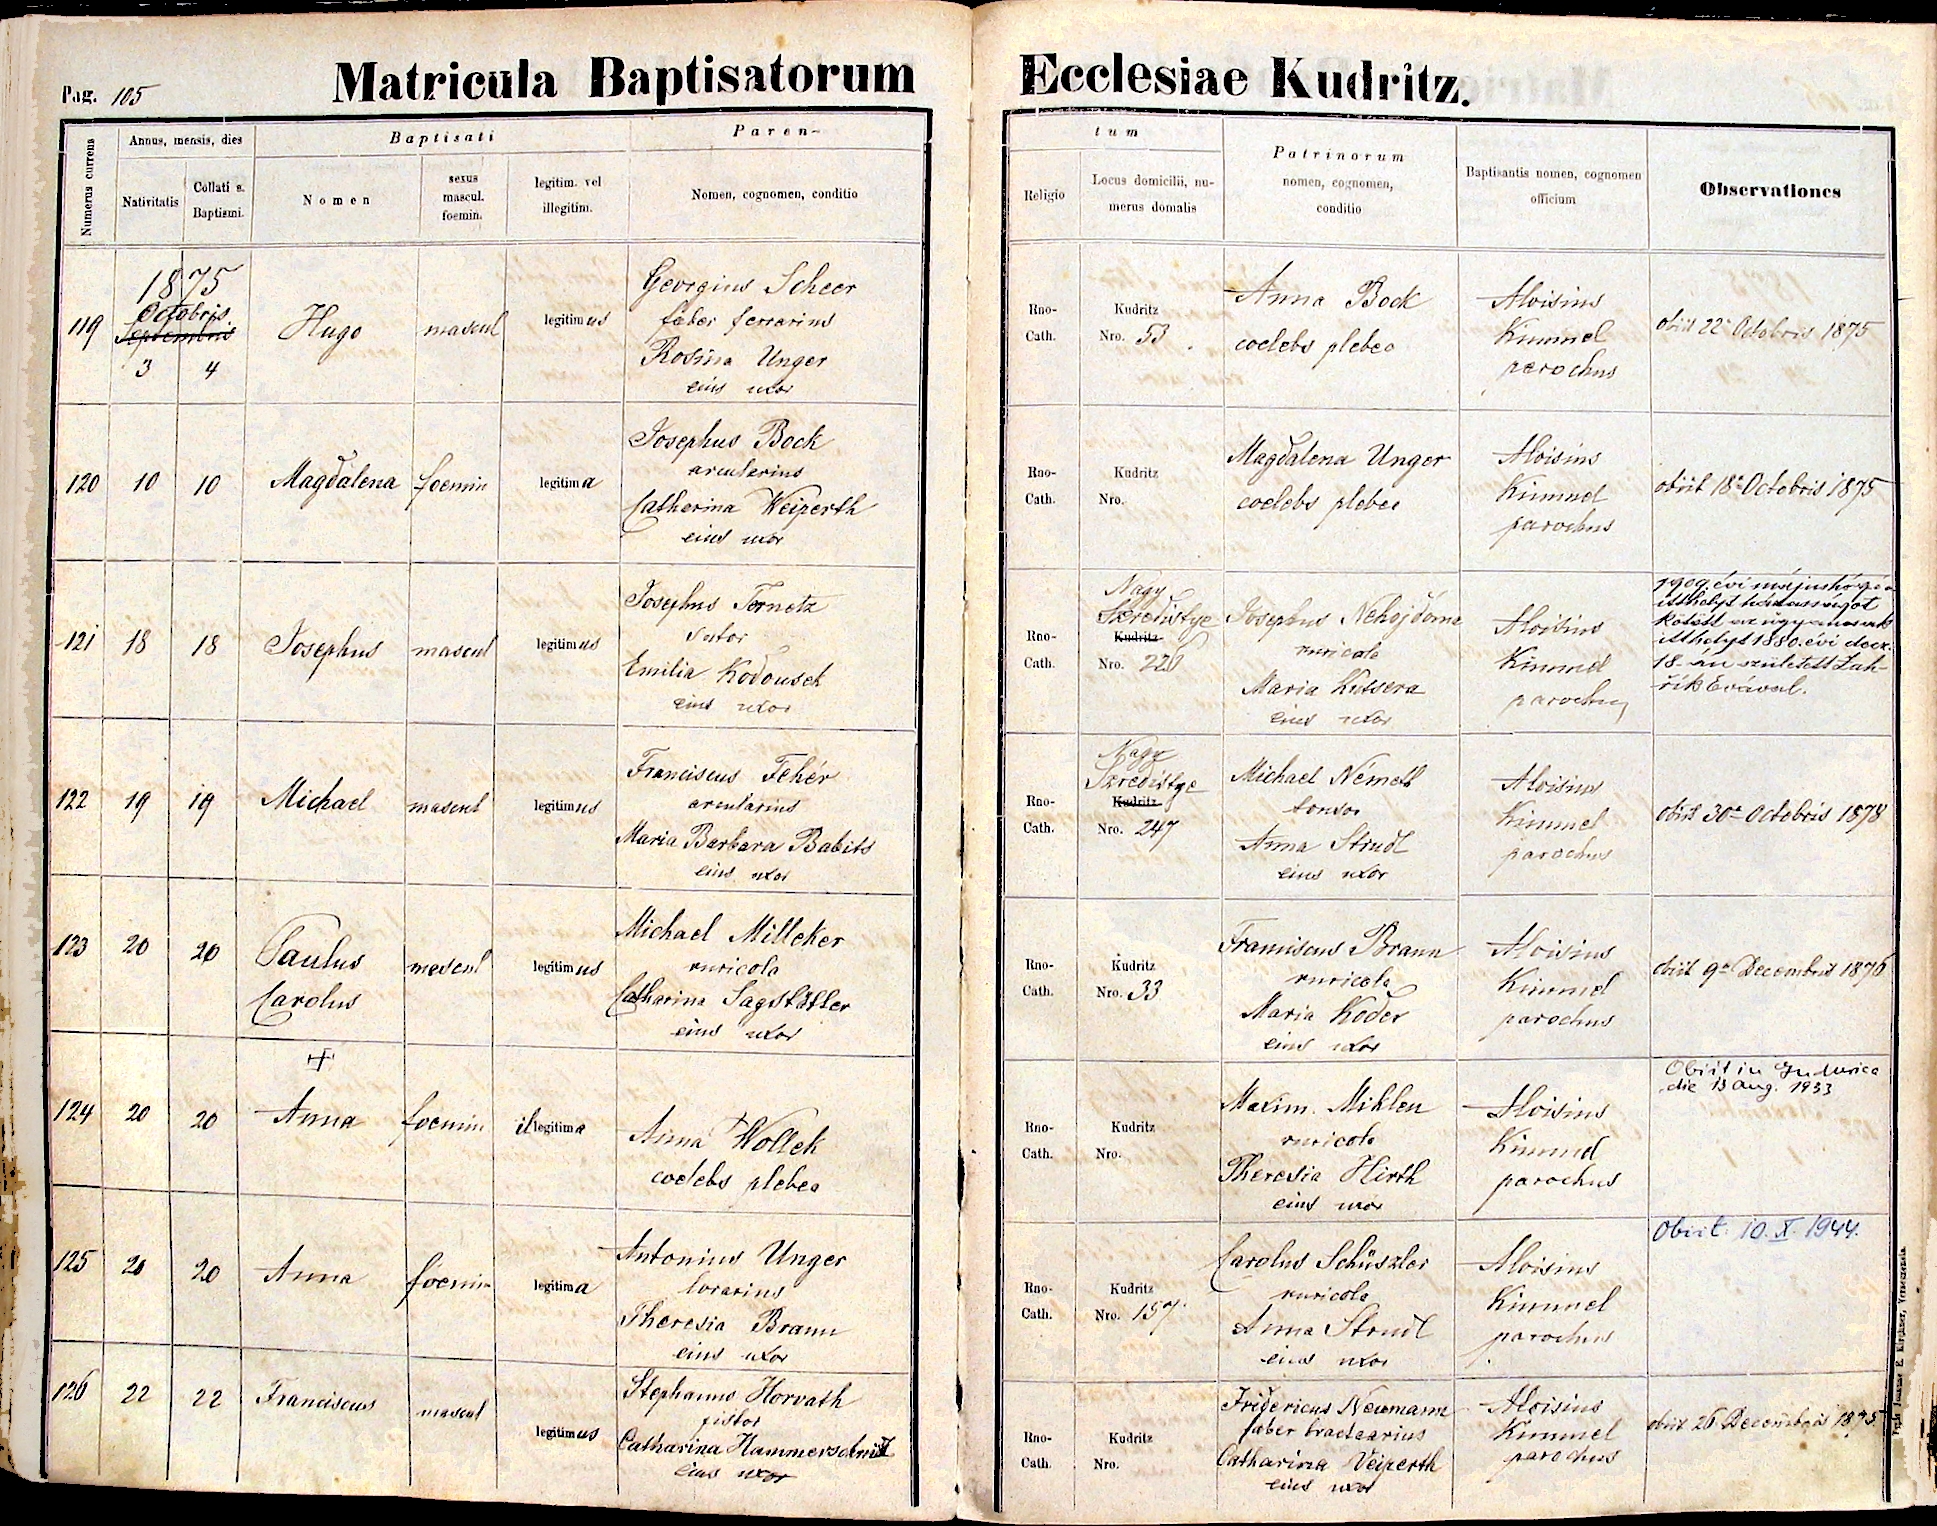 images/church_records/BIRTHS/1884-1899B/1890/105